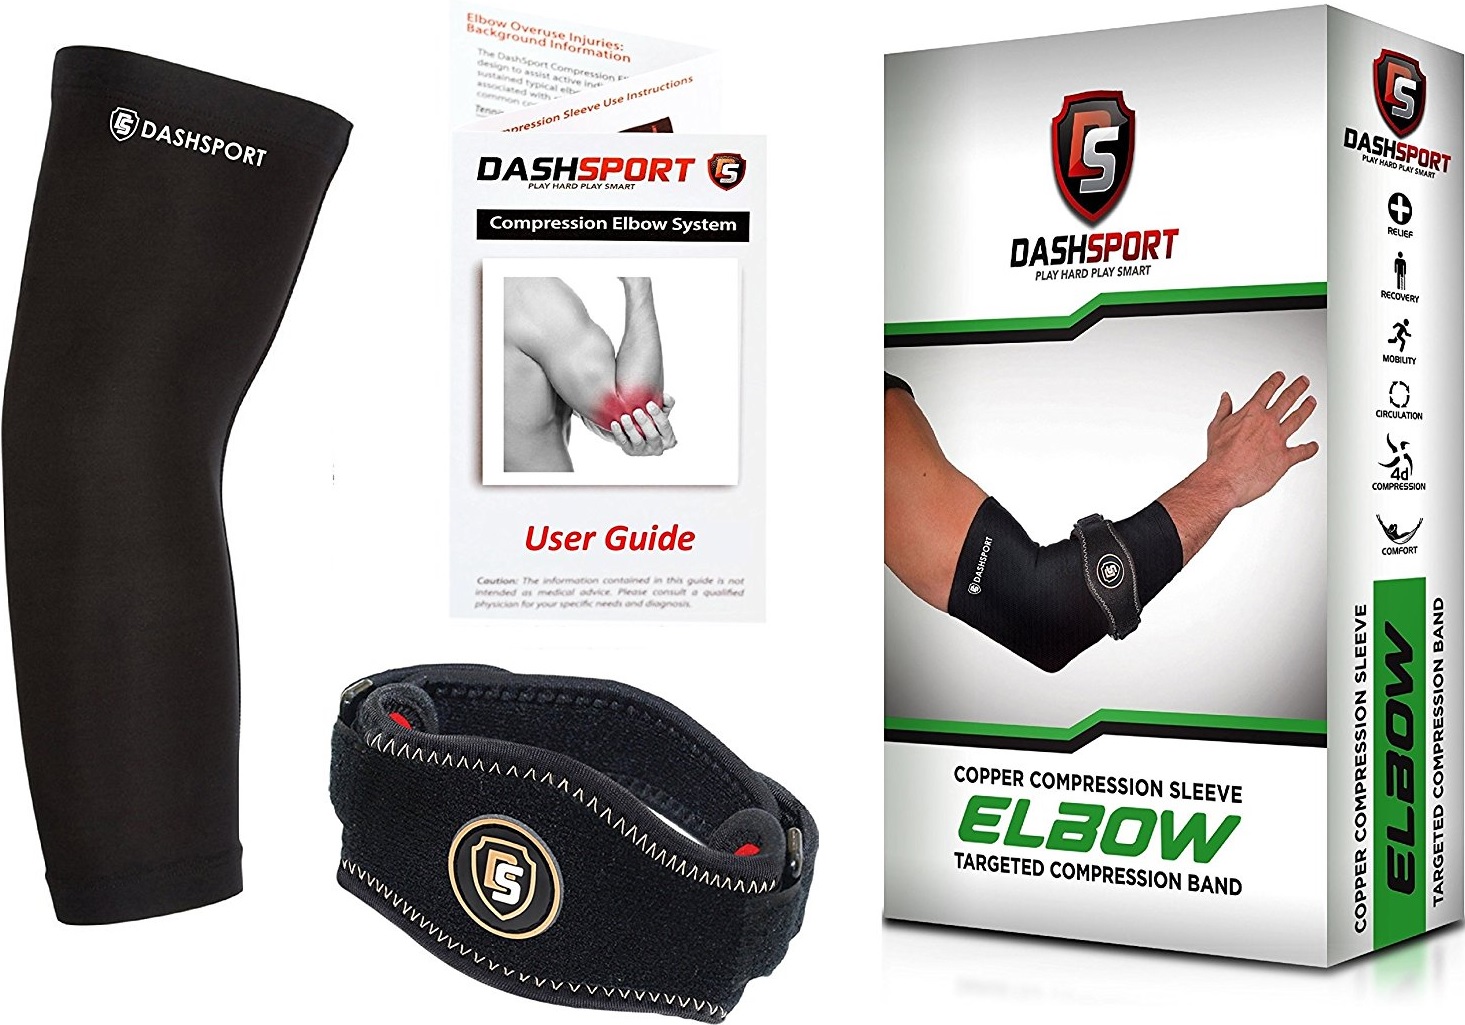 The DashSport Tennis Elbow Brace